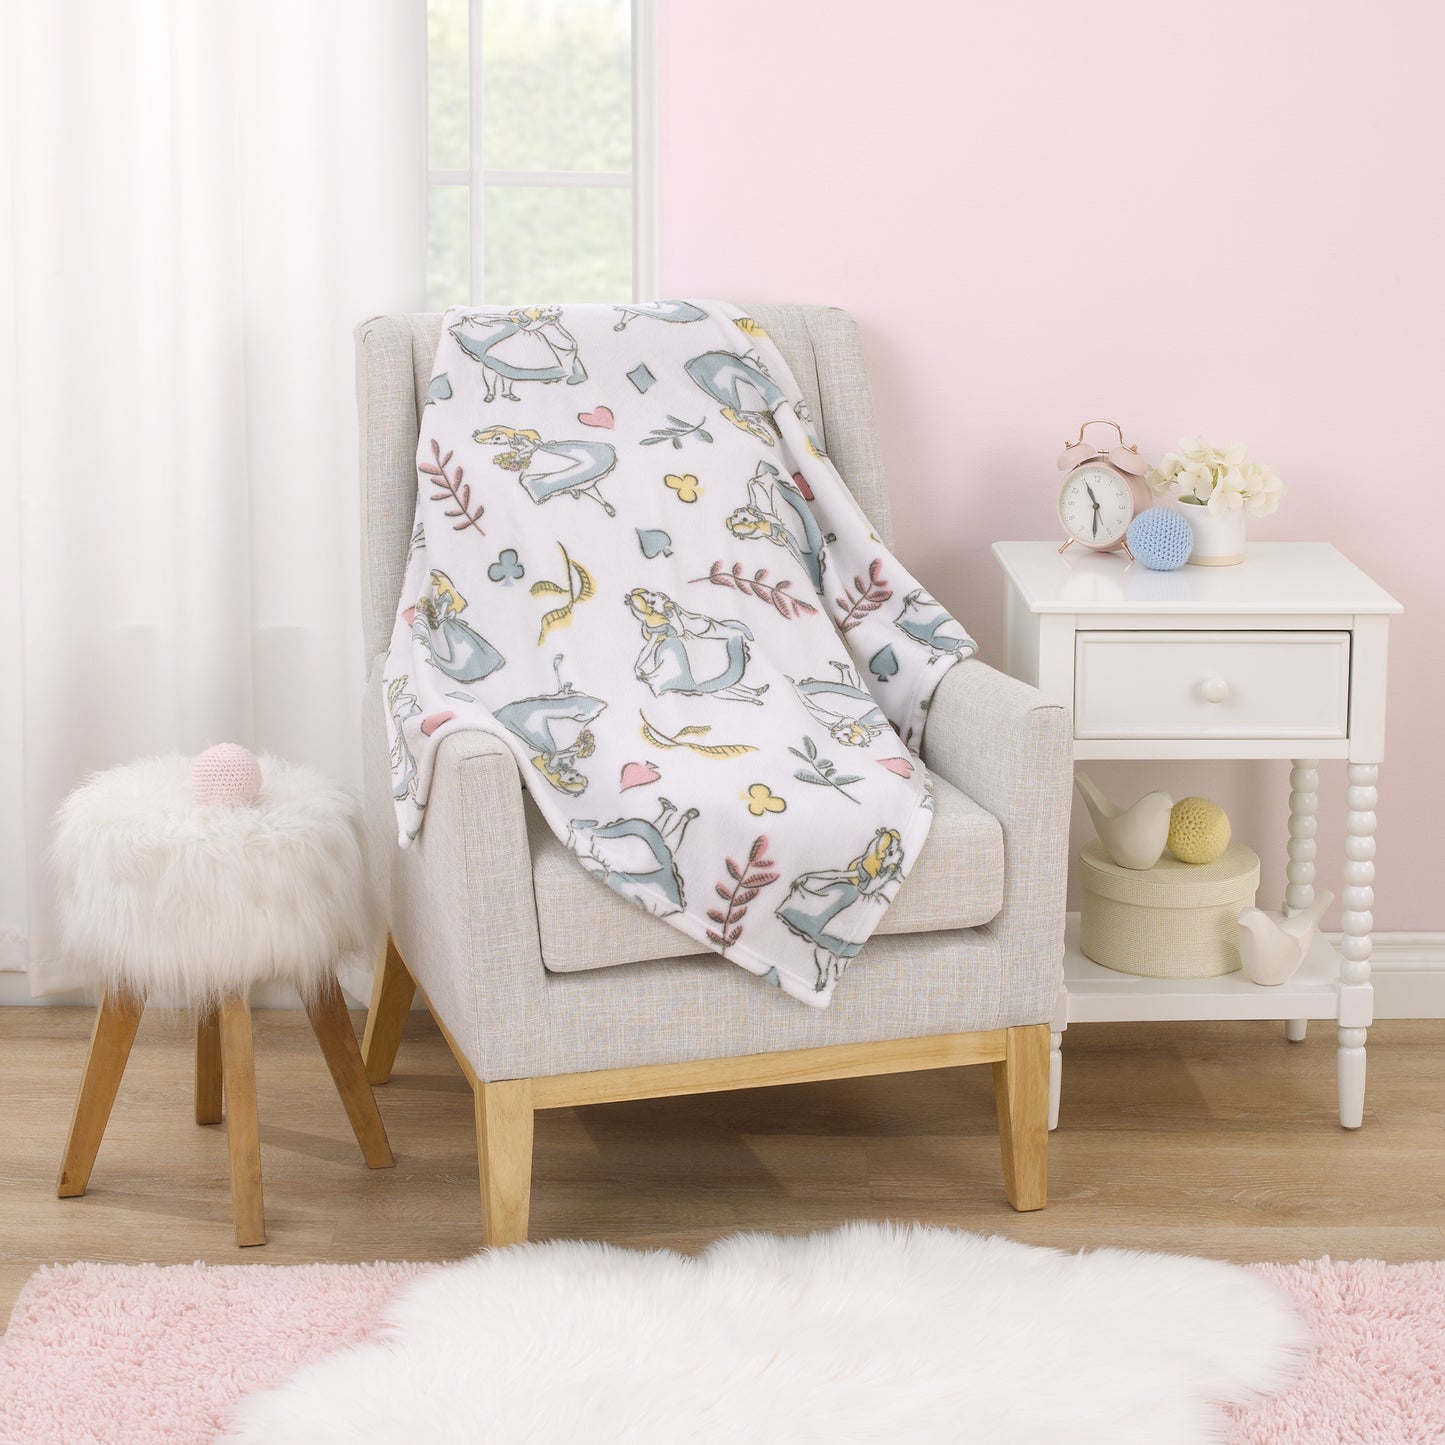 Disney Alice in Wonderland Light Blue, Pink, Yellow, and White Super Soft Plush Baby Blanket